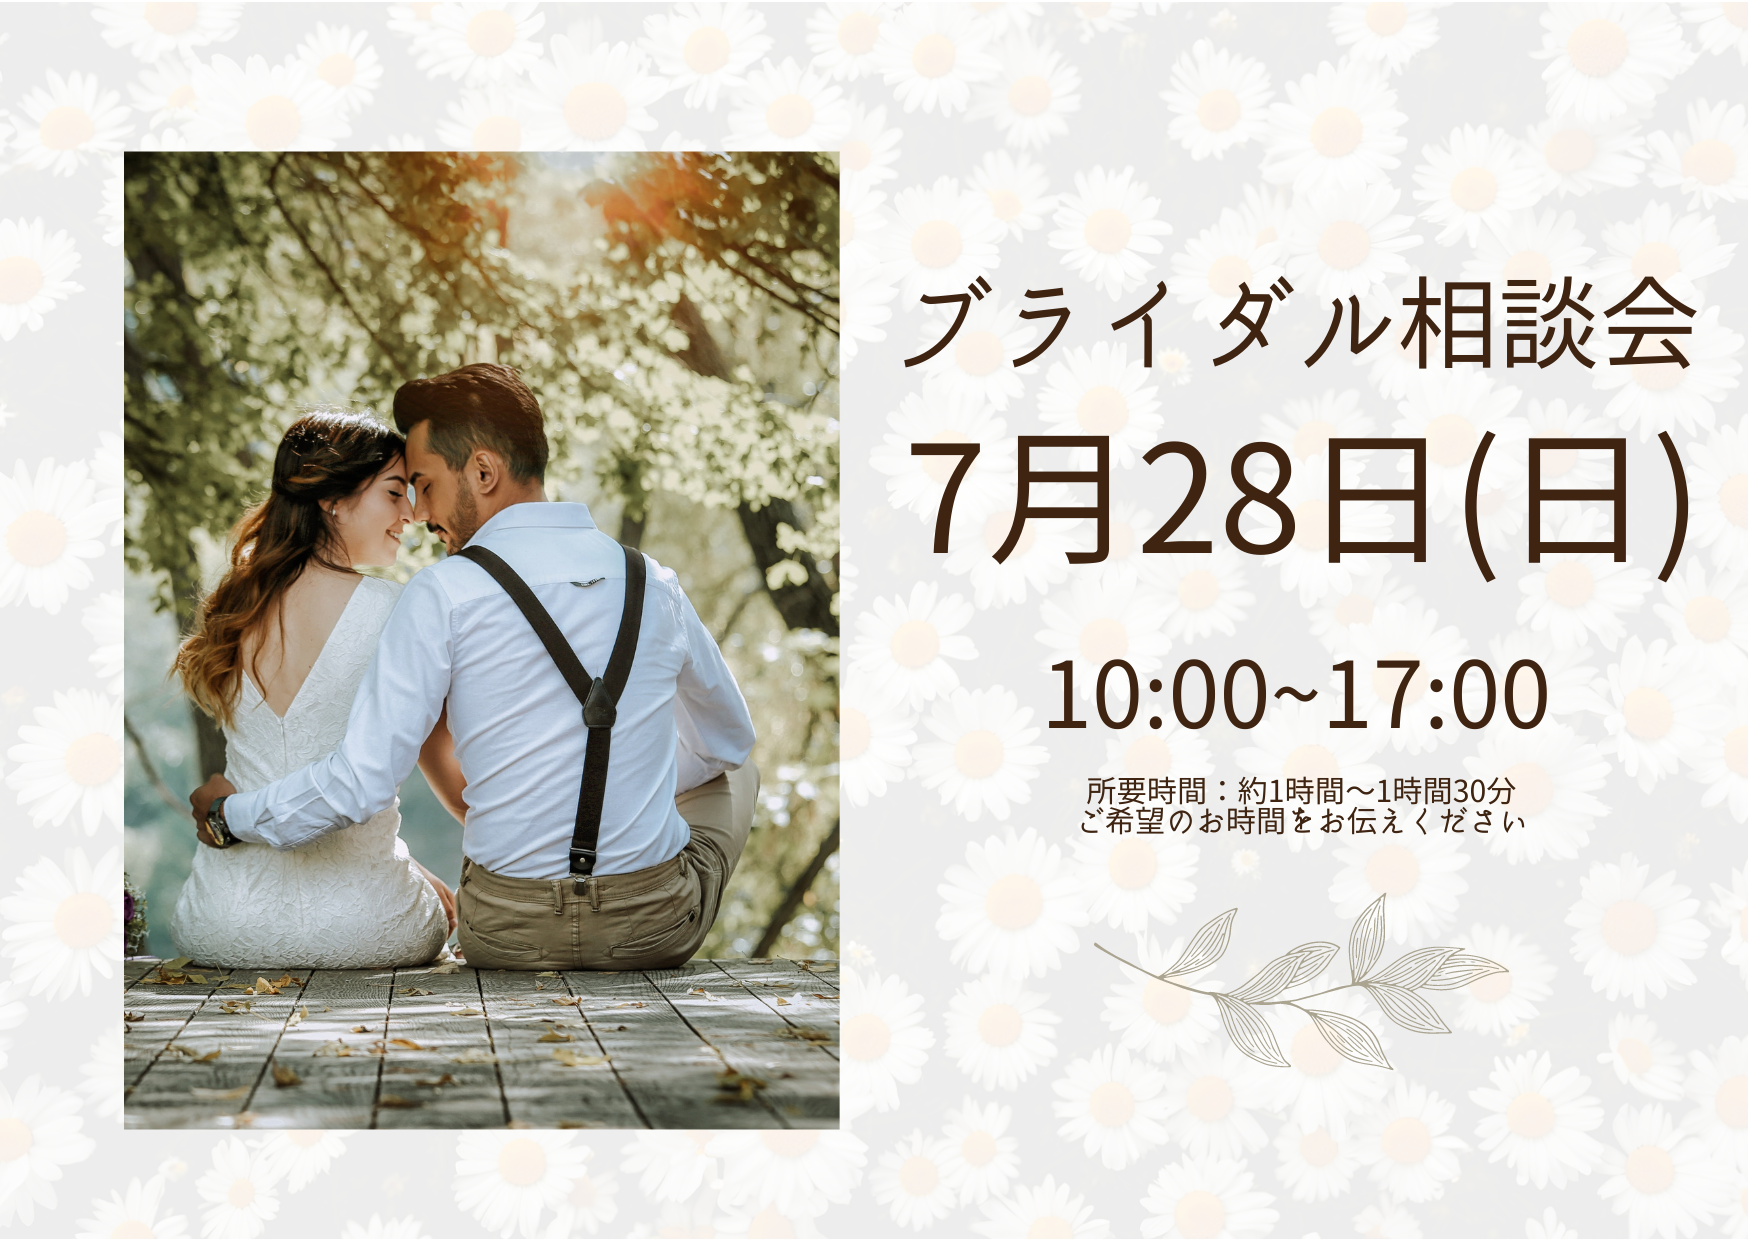 Bridal相談会【7/28(日)】